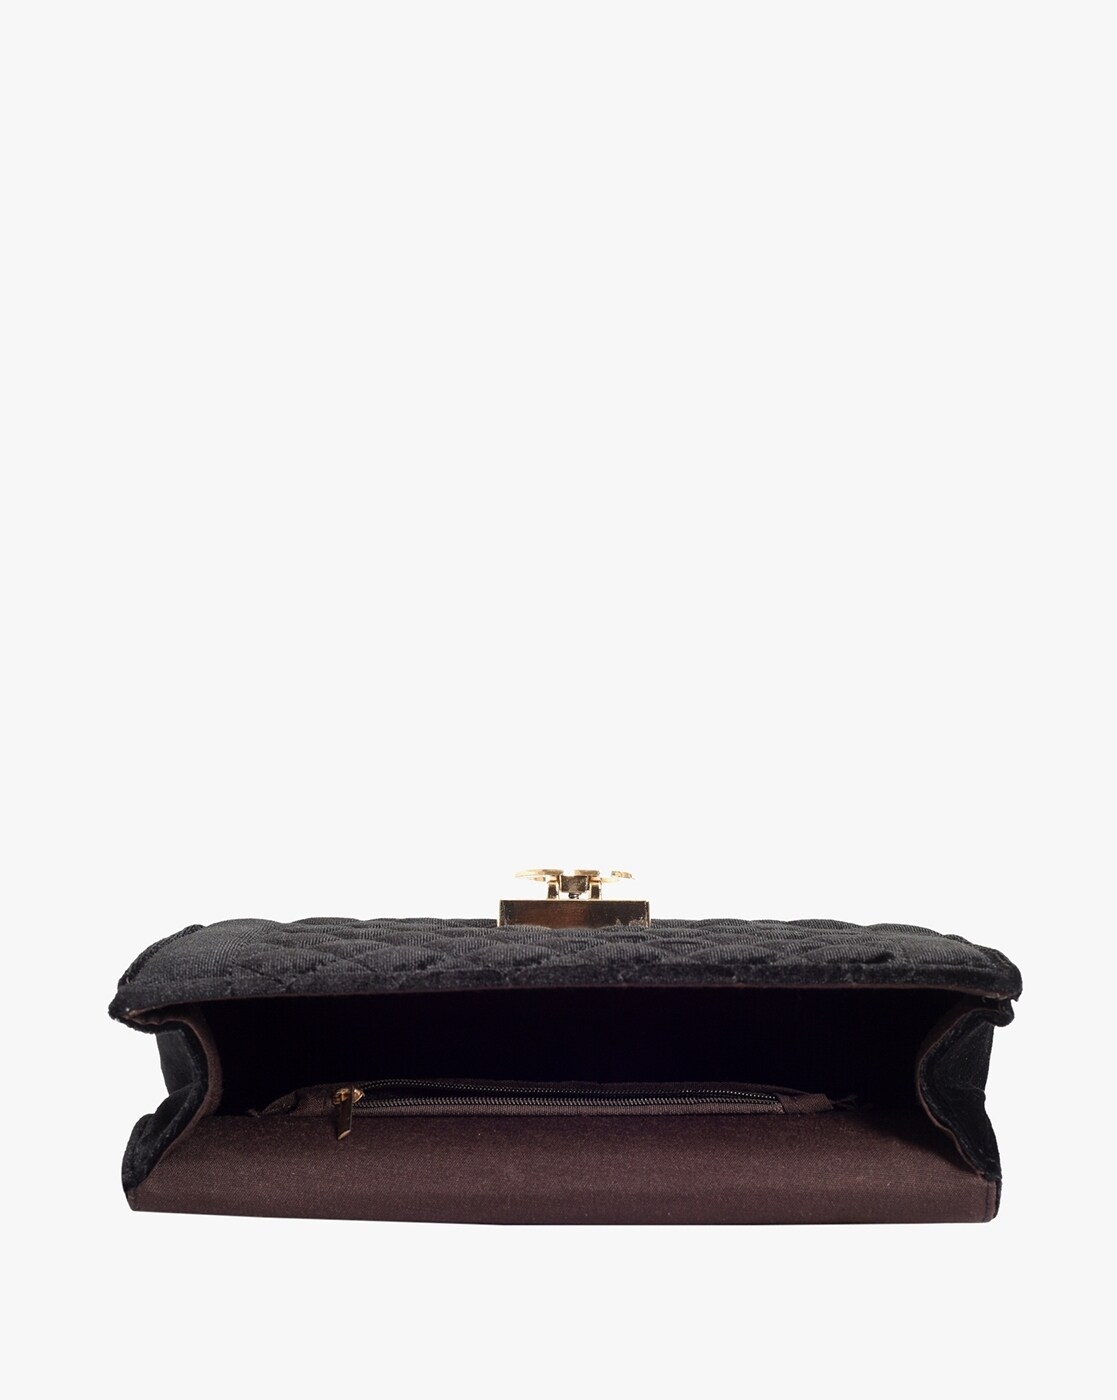 Buy Lino Perros Black Quilted Shoulder Bag - Handbags for Women 8920865